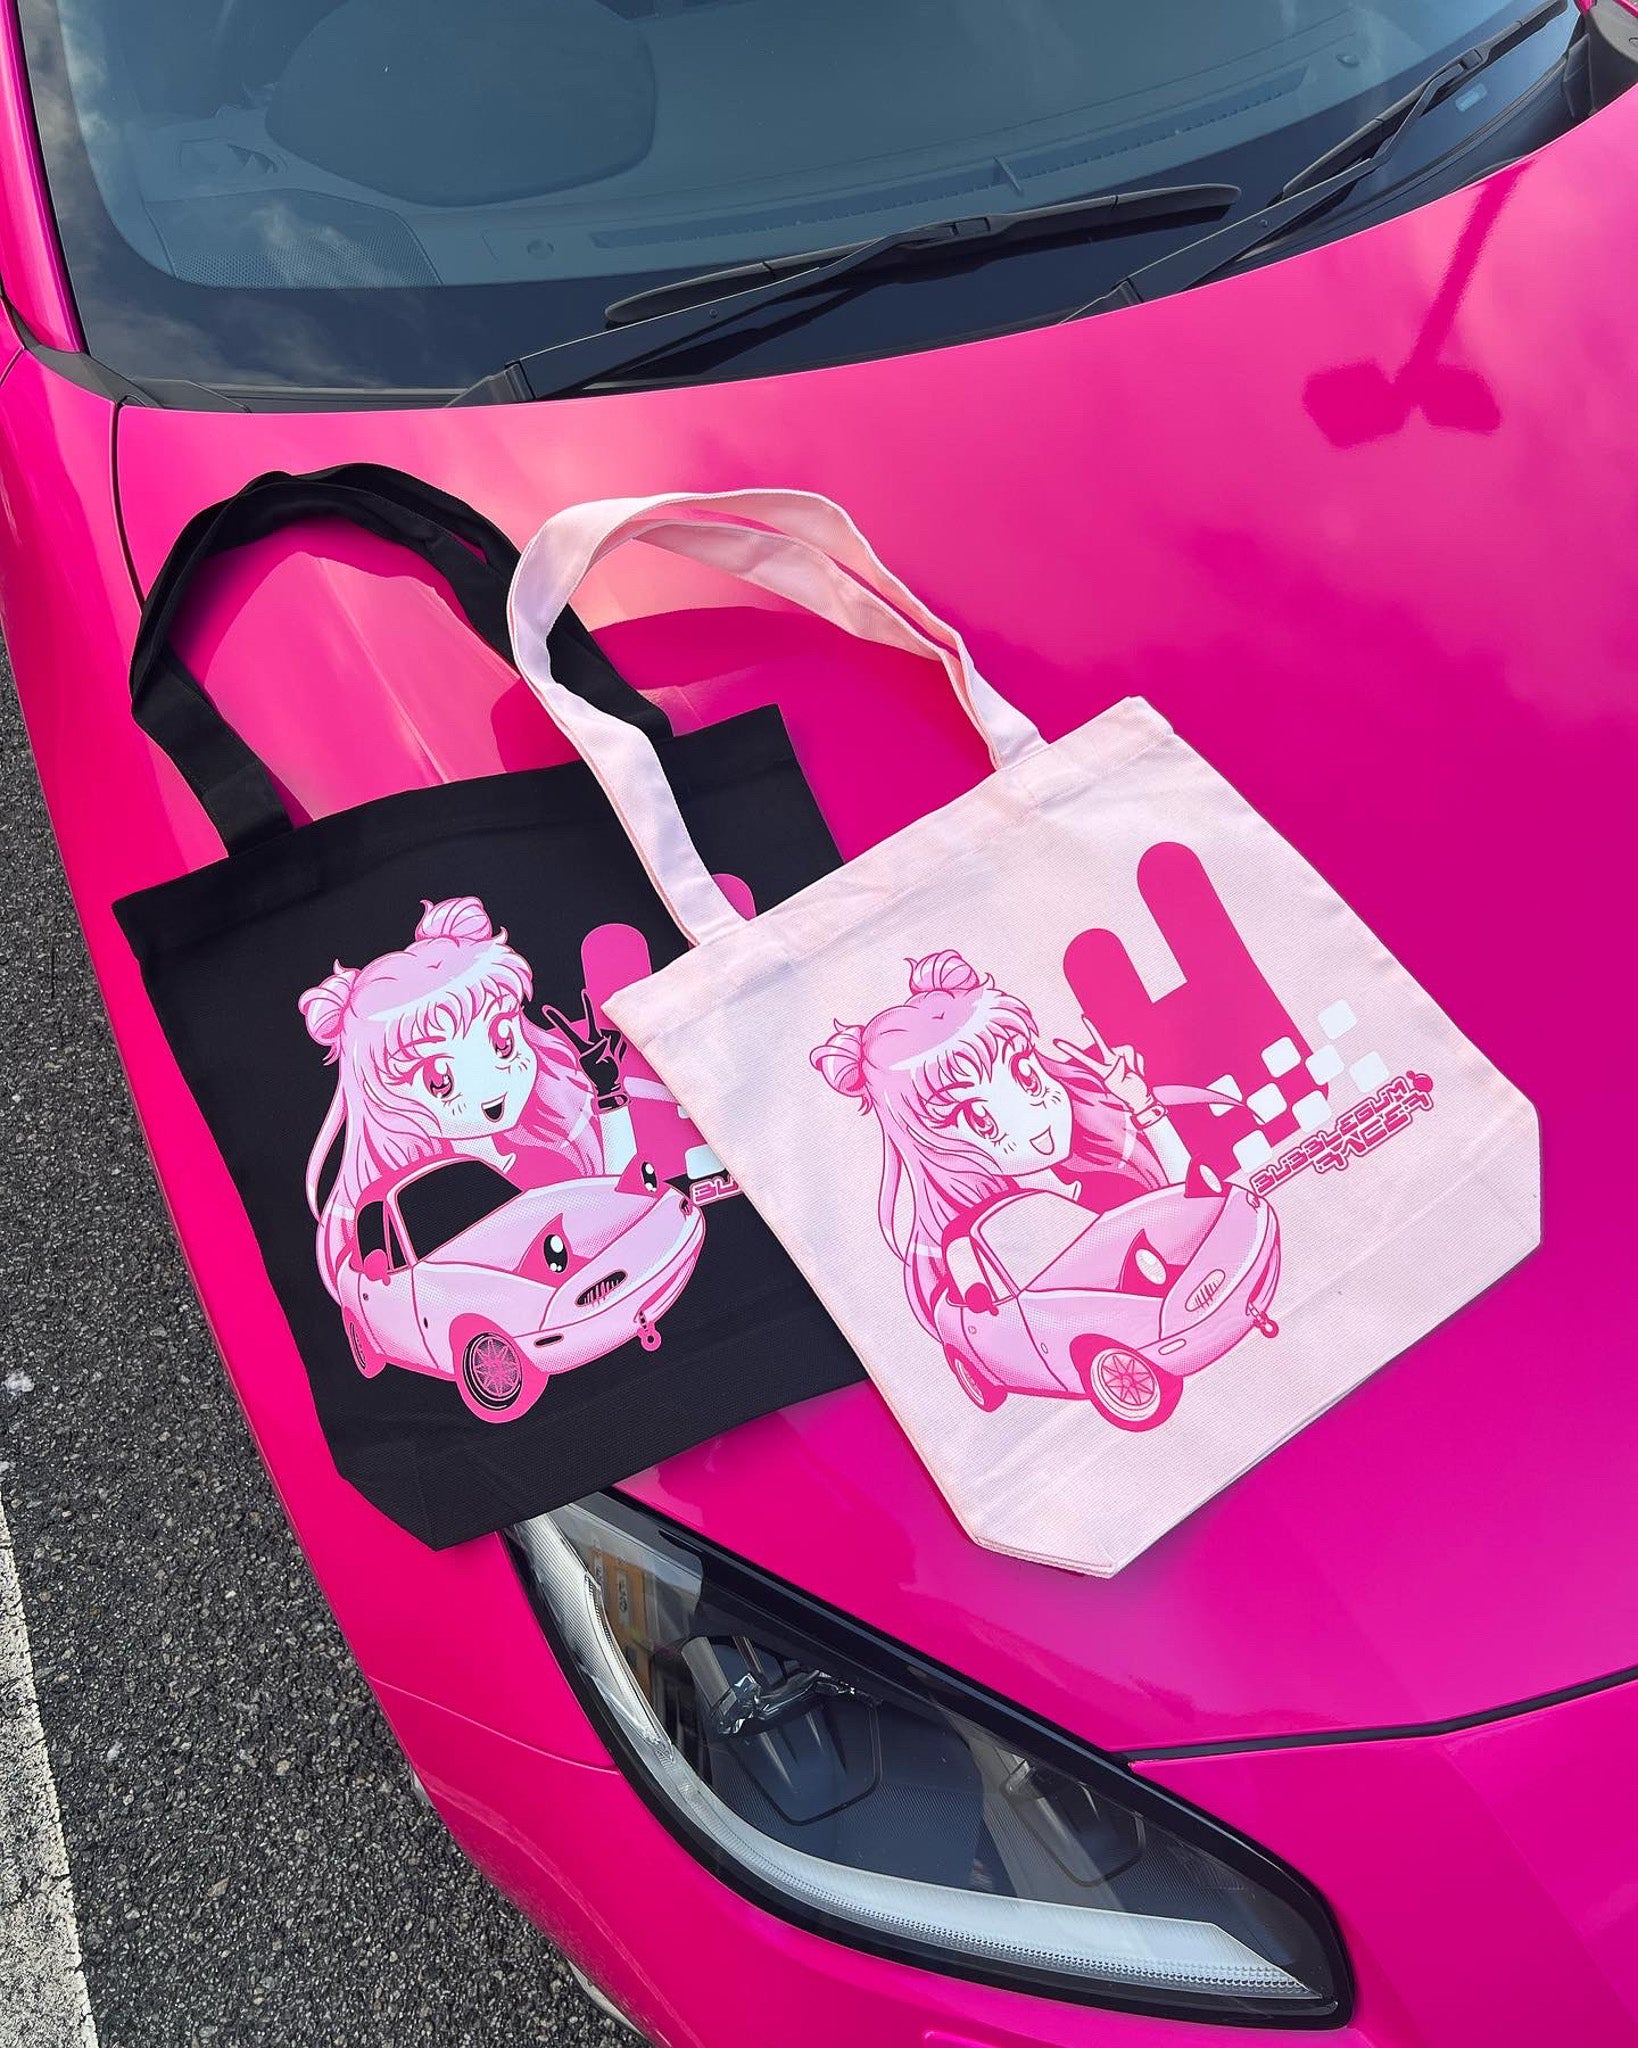 Bubblegum Racer Miata Sakura - Tote (Pink or Black)  Drift bunny decals